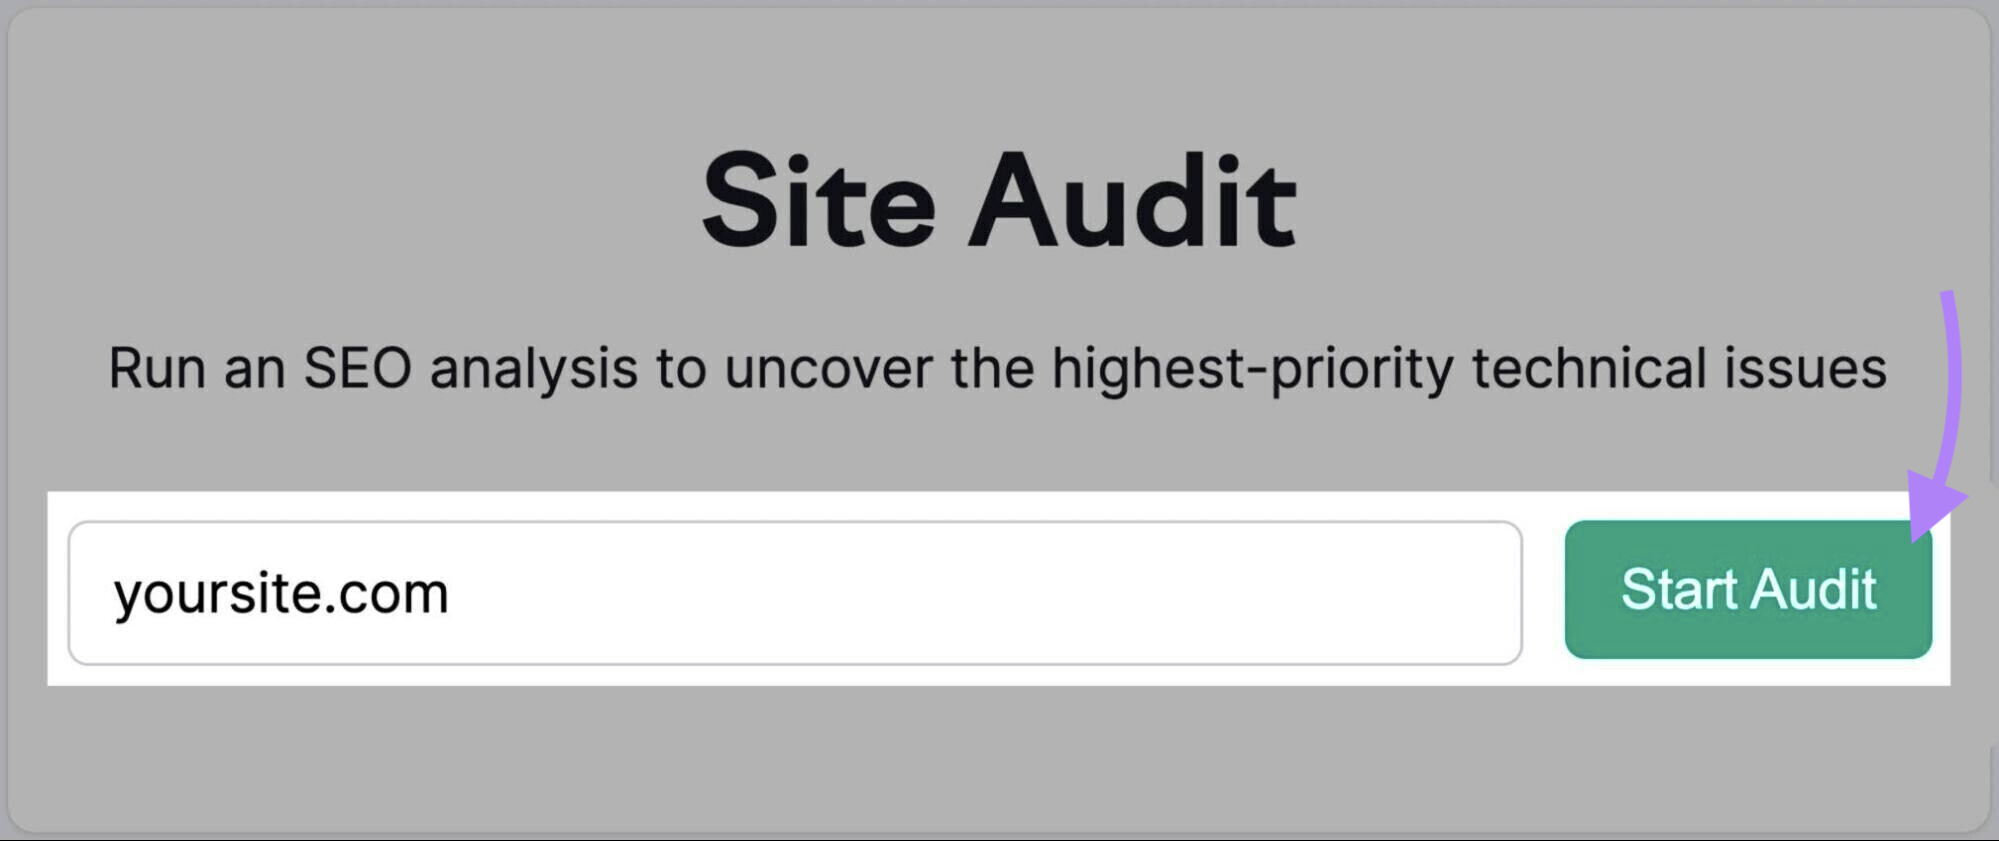 Site audit tool, enter your domain